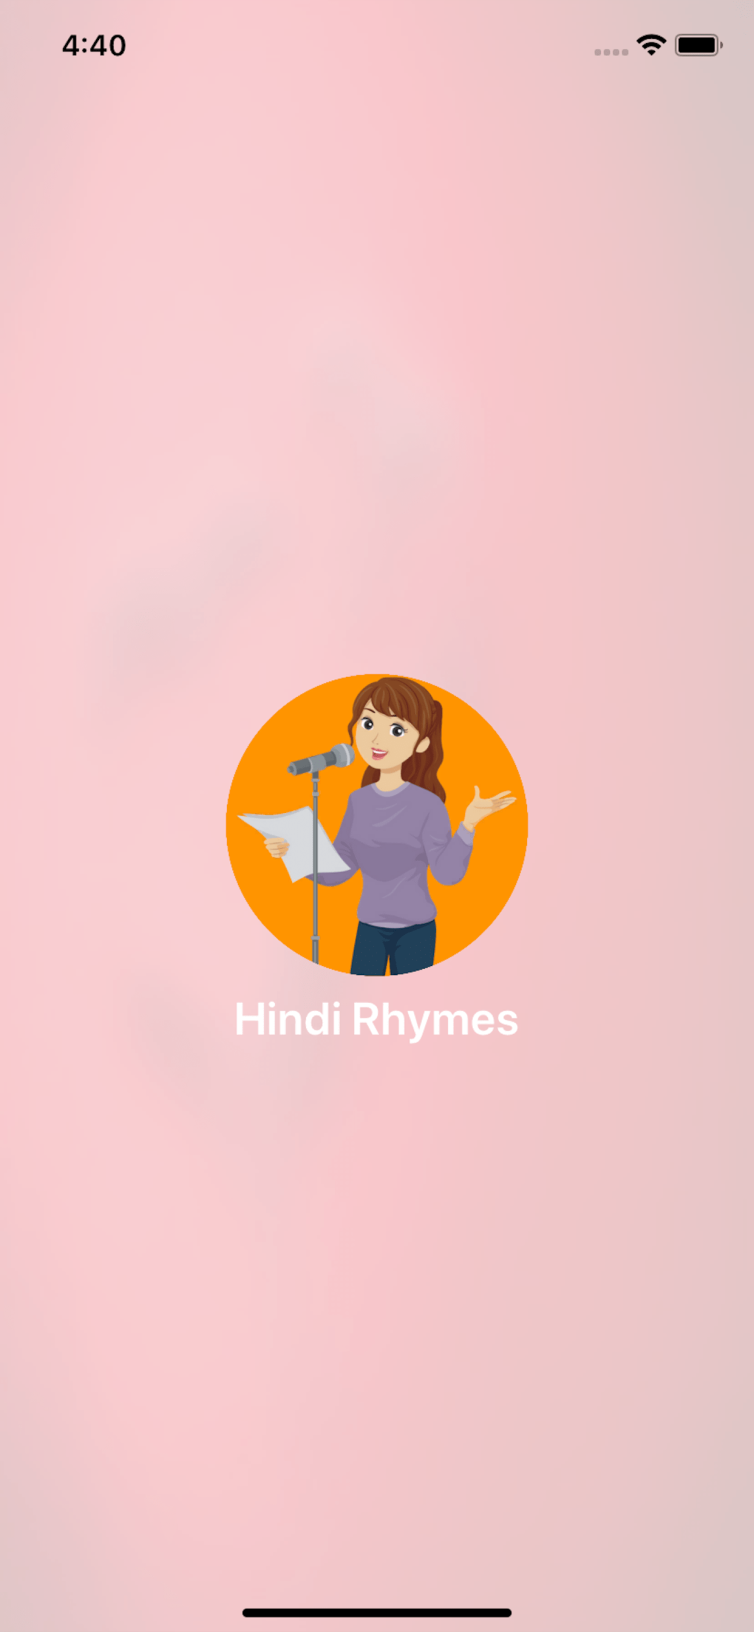 HindiRhymes